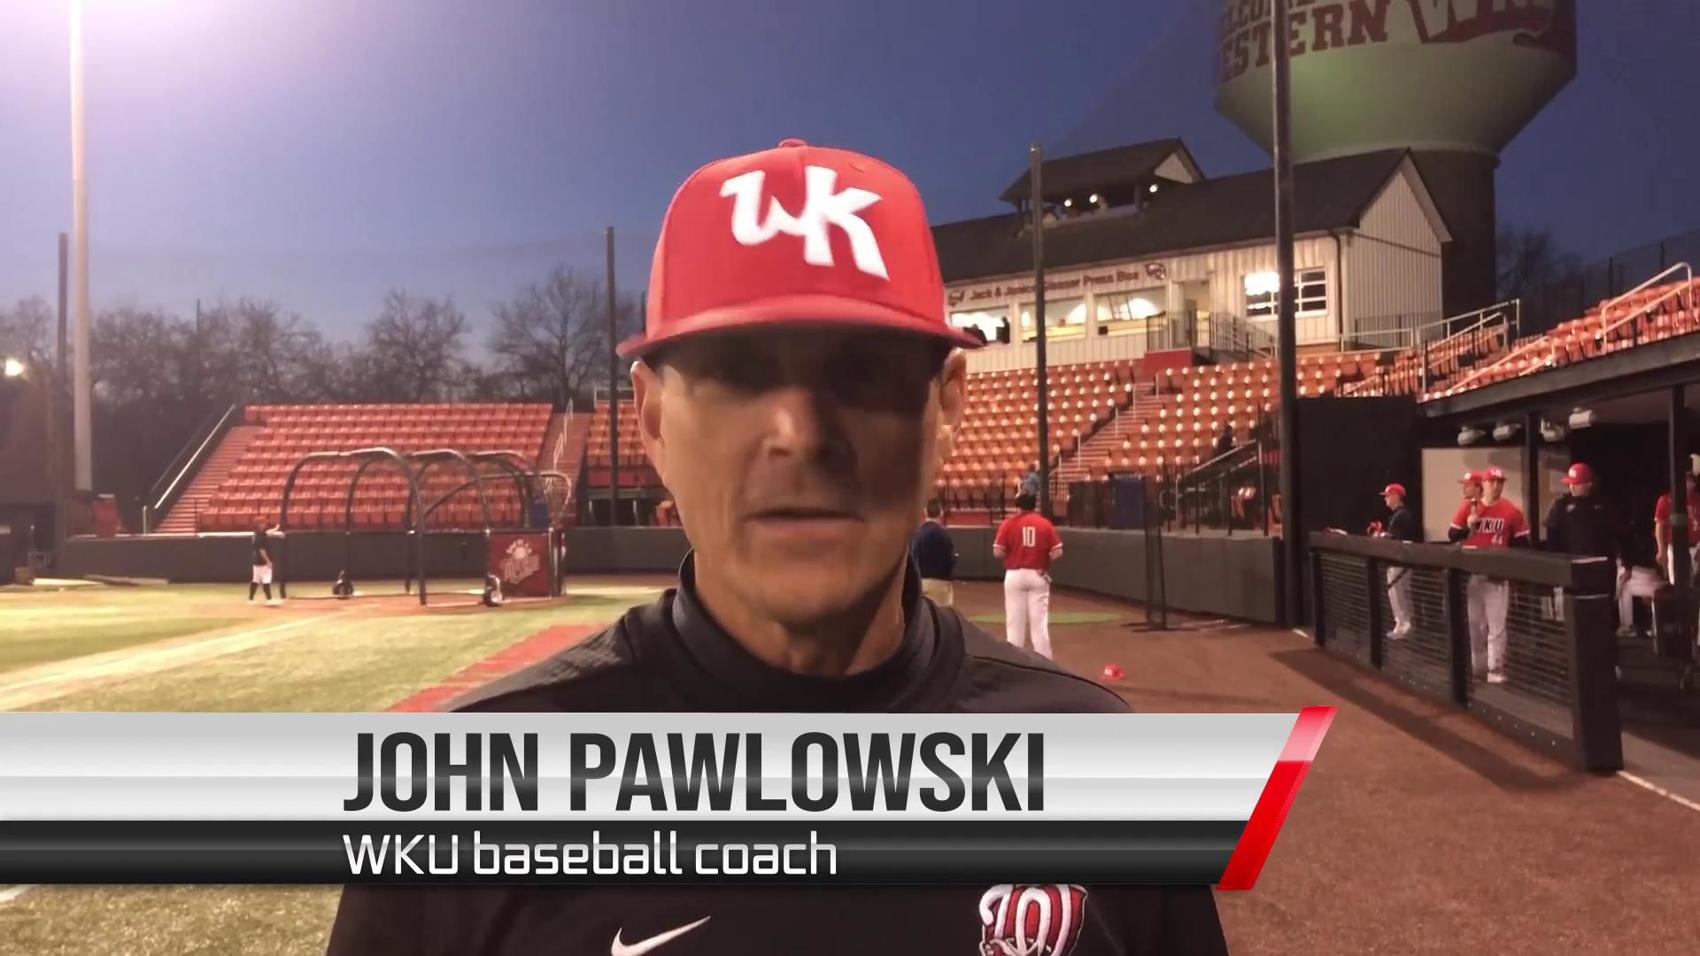 VIDEO: WKU baseball coach John Pawlowski